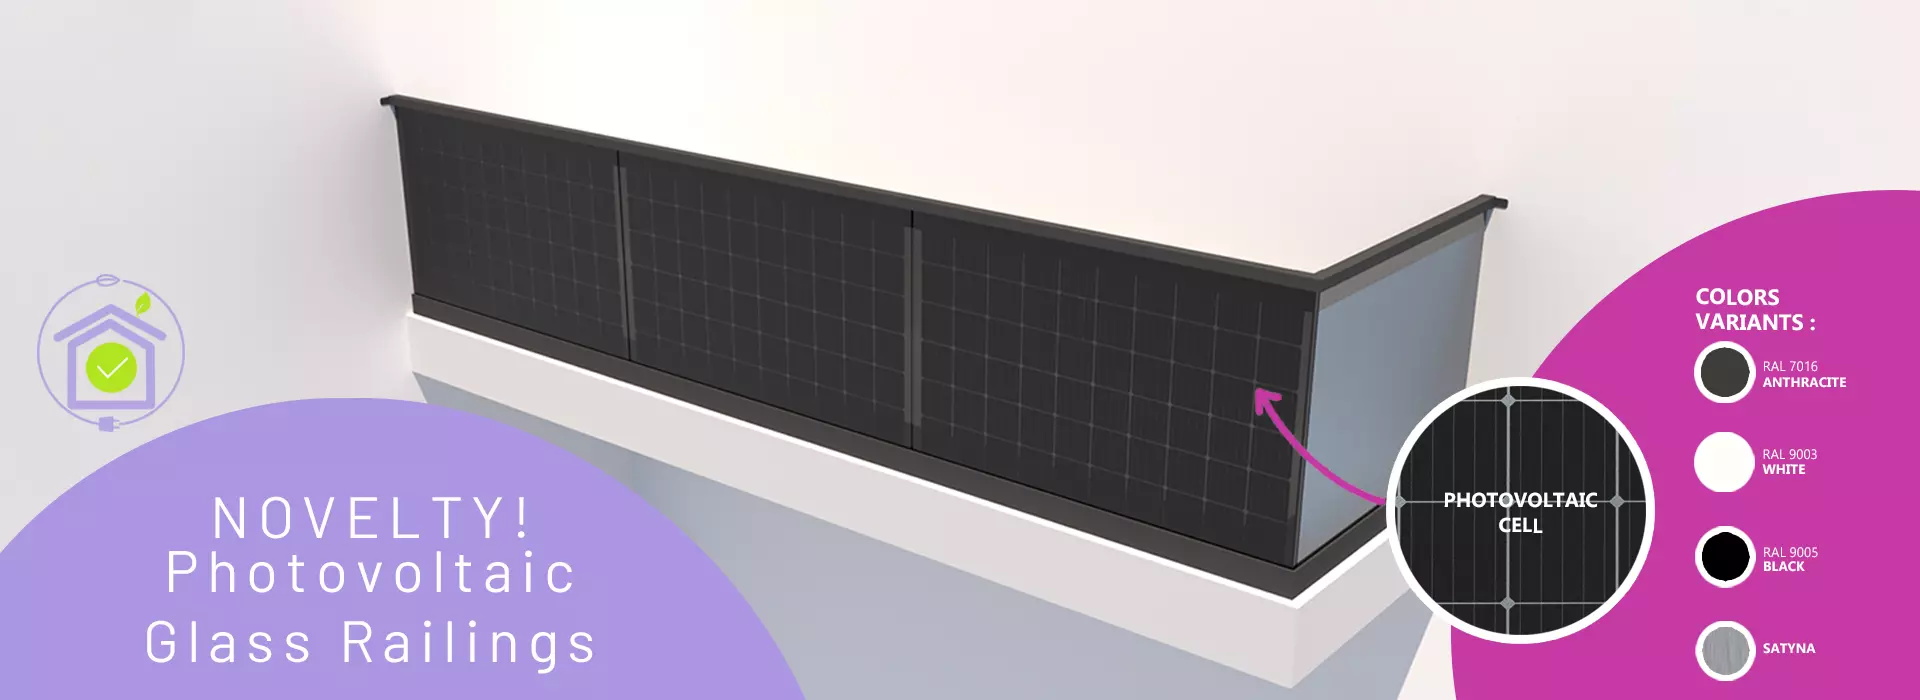 banner rapdach photovoltaic balustrade